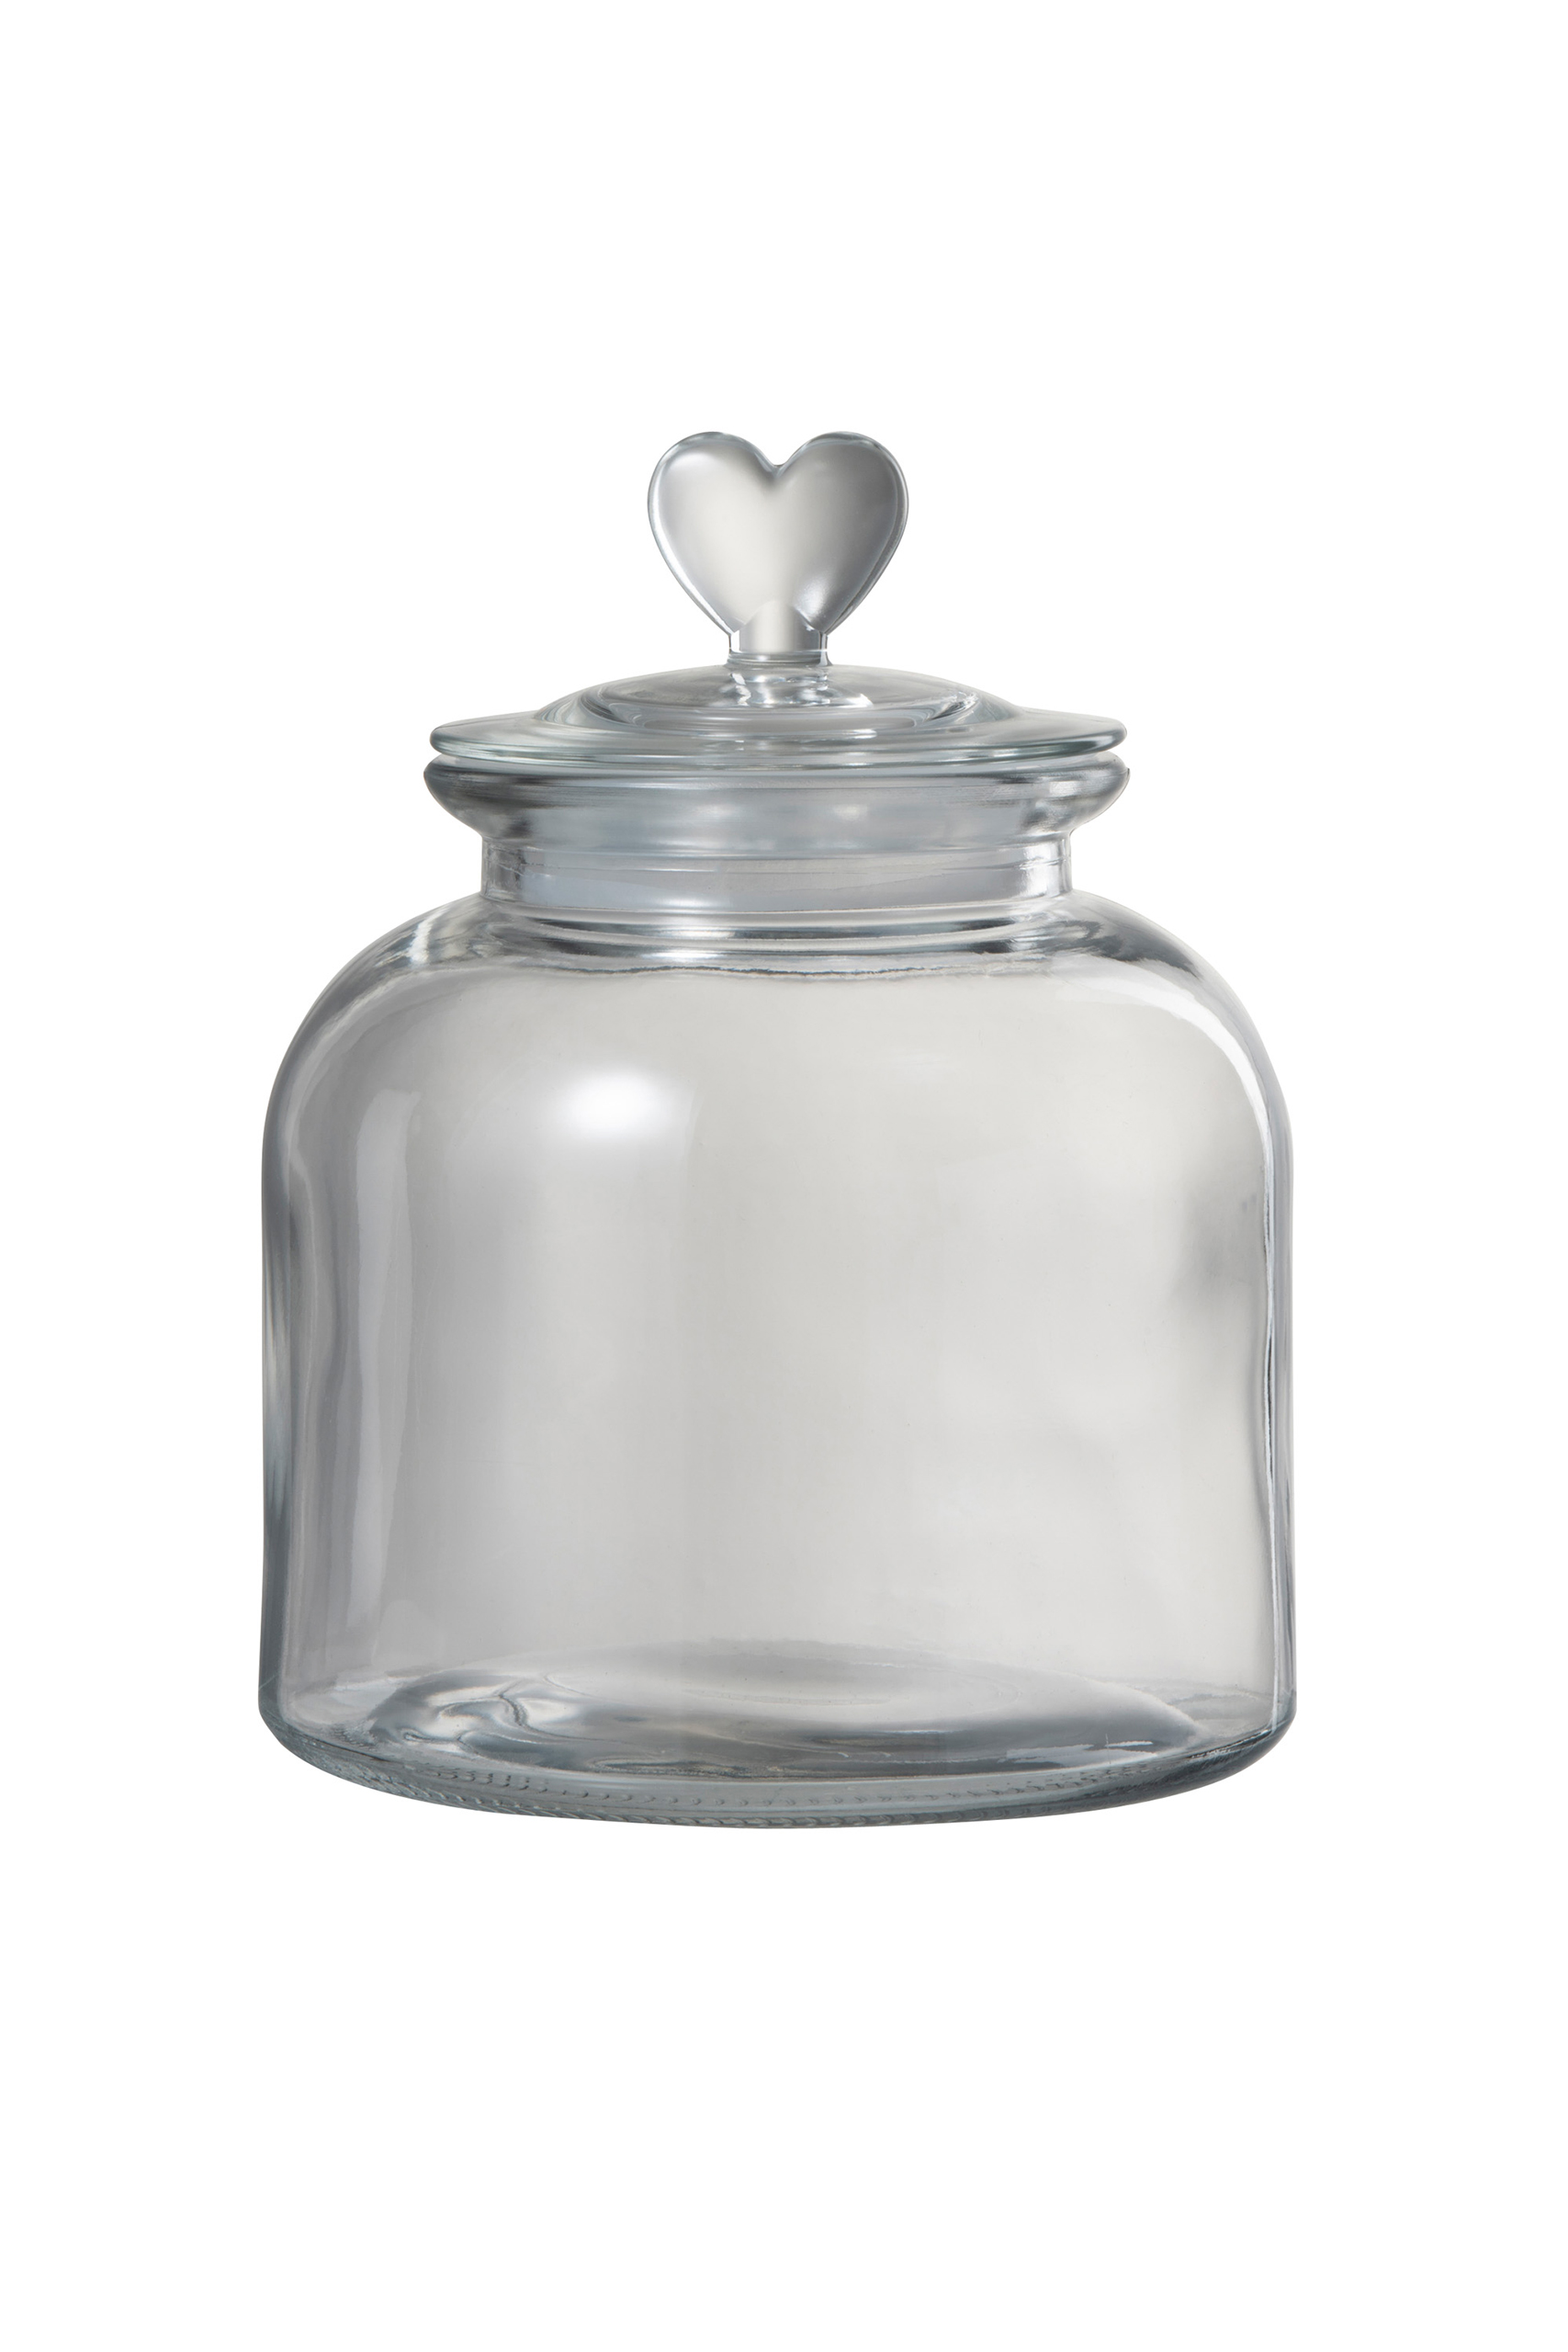 Glass Heart Jar - Small | Pretty Little Home